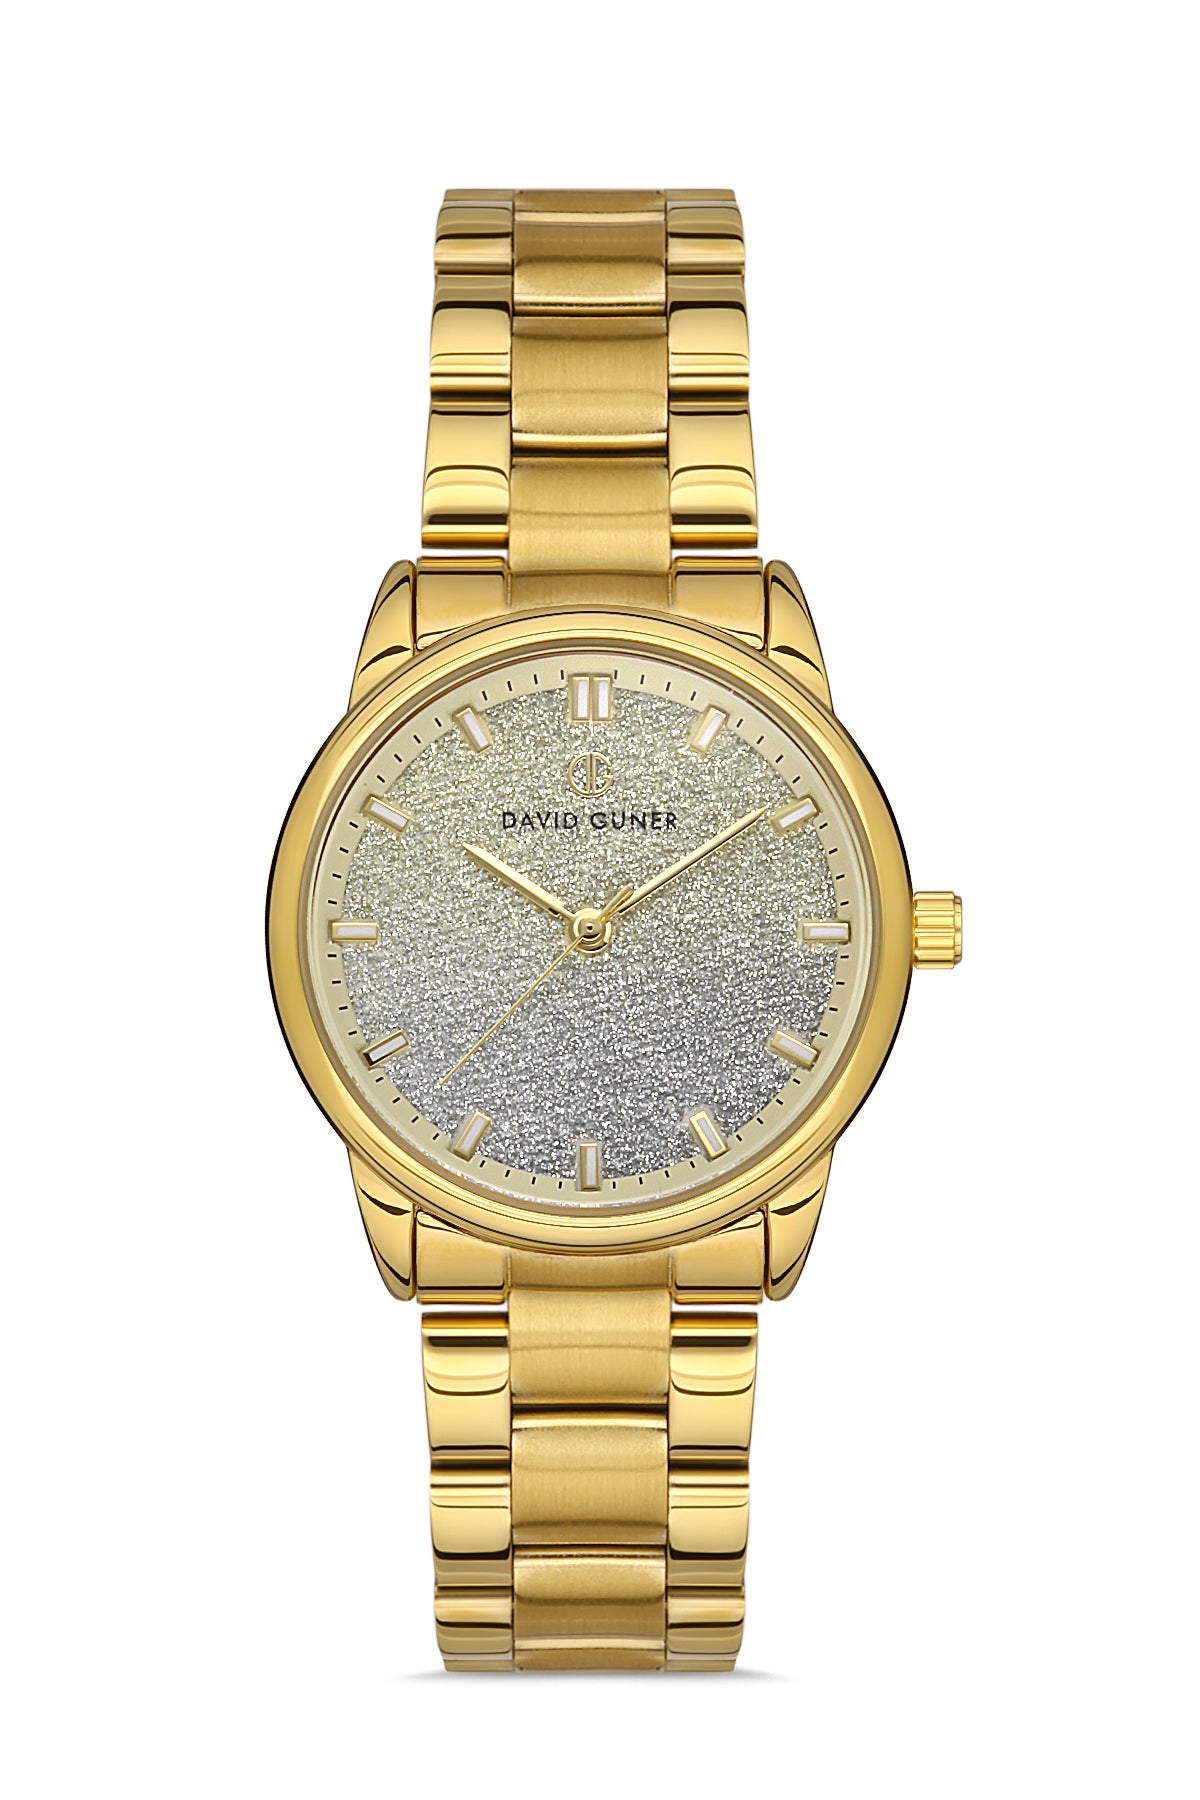 DAVID GUNER Yellow Coated Women's Wristwatch